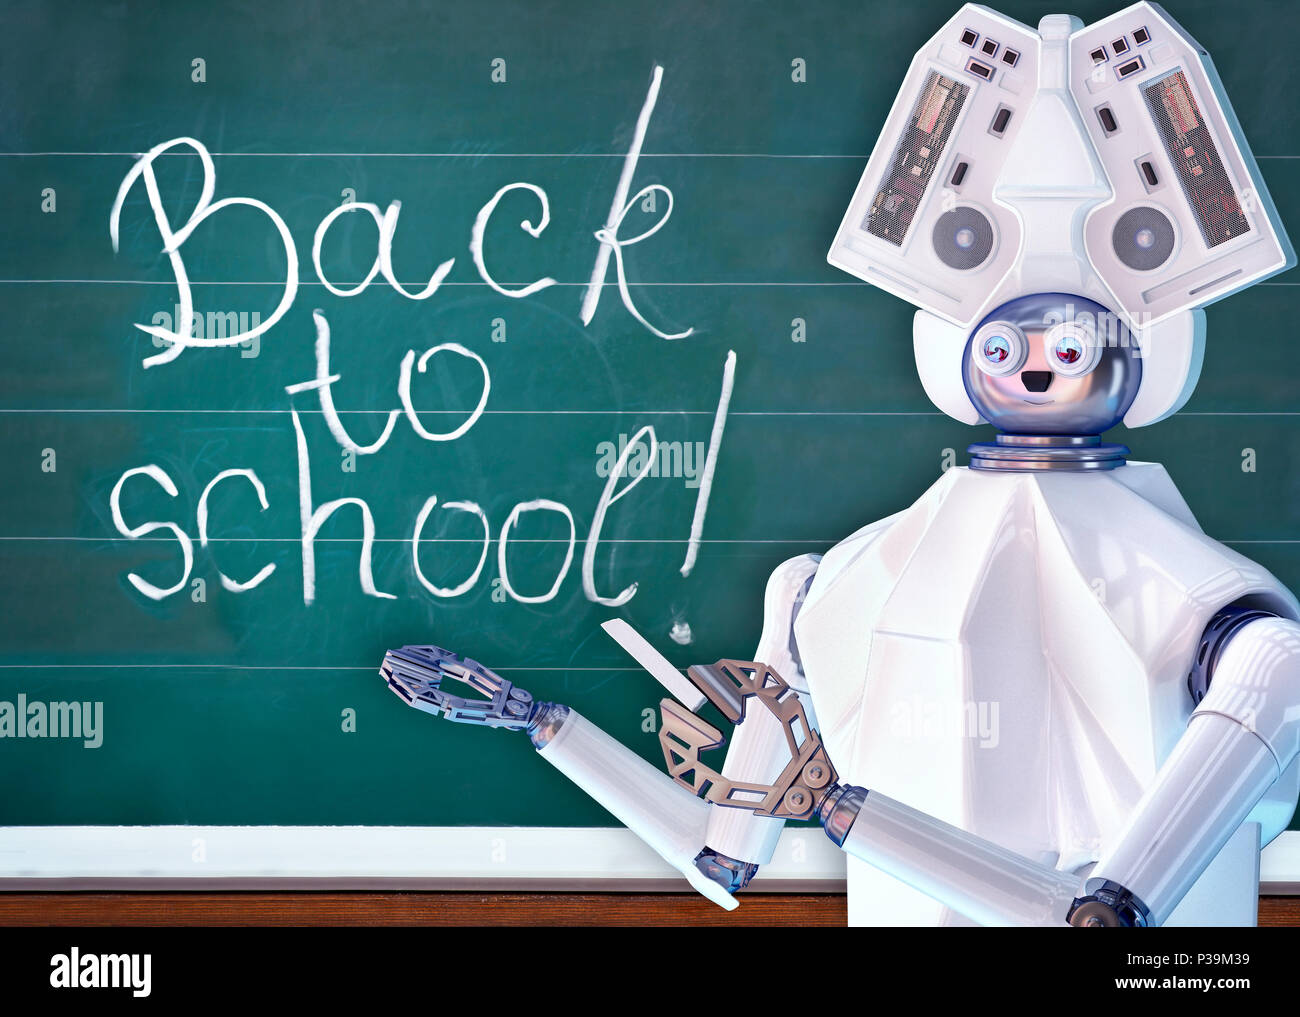 Teacher robot with artificial intelligence in school class blackboard. Stock Photo